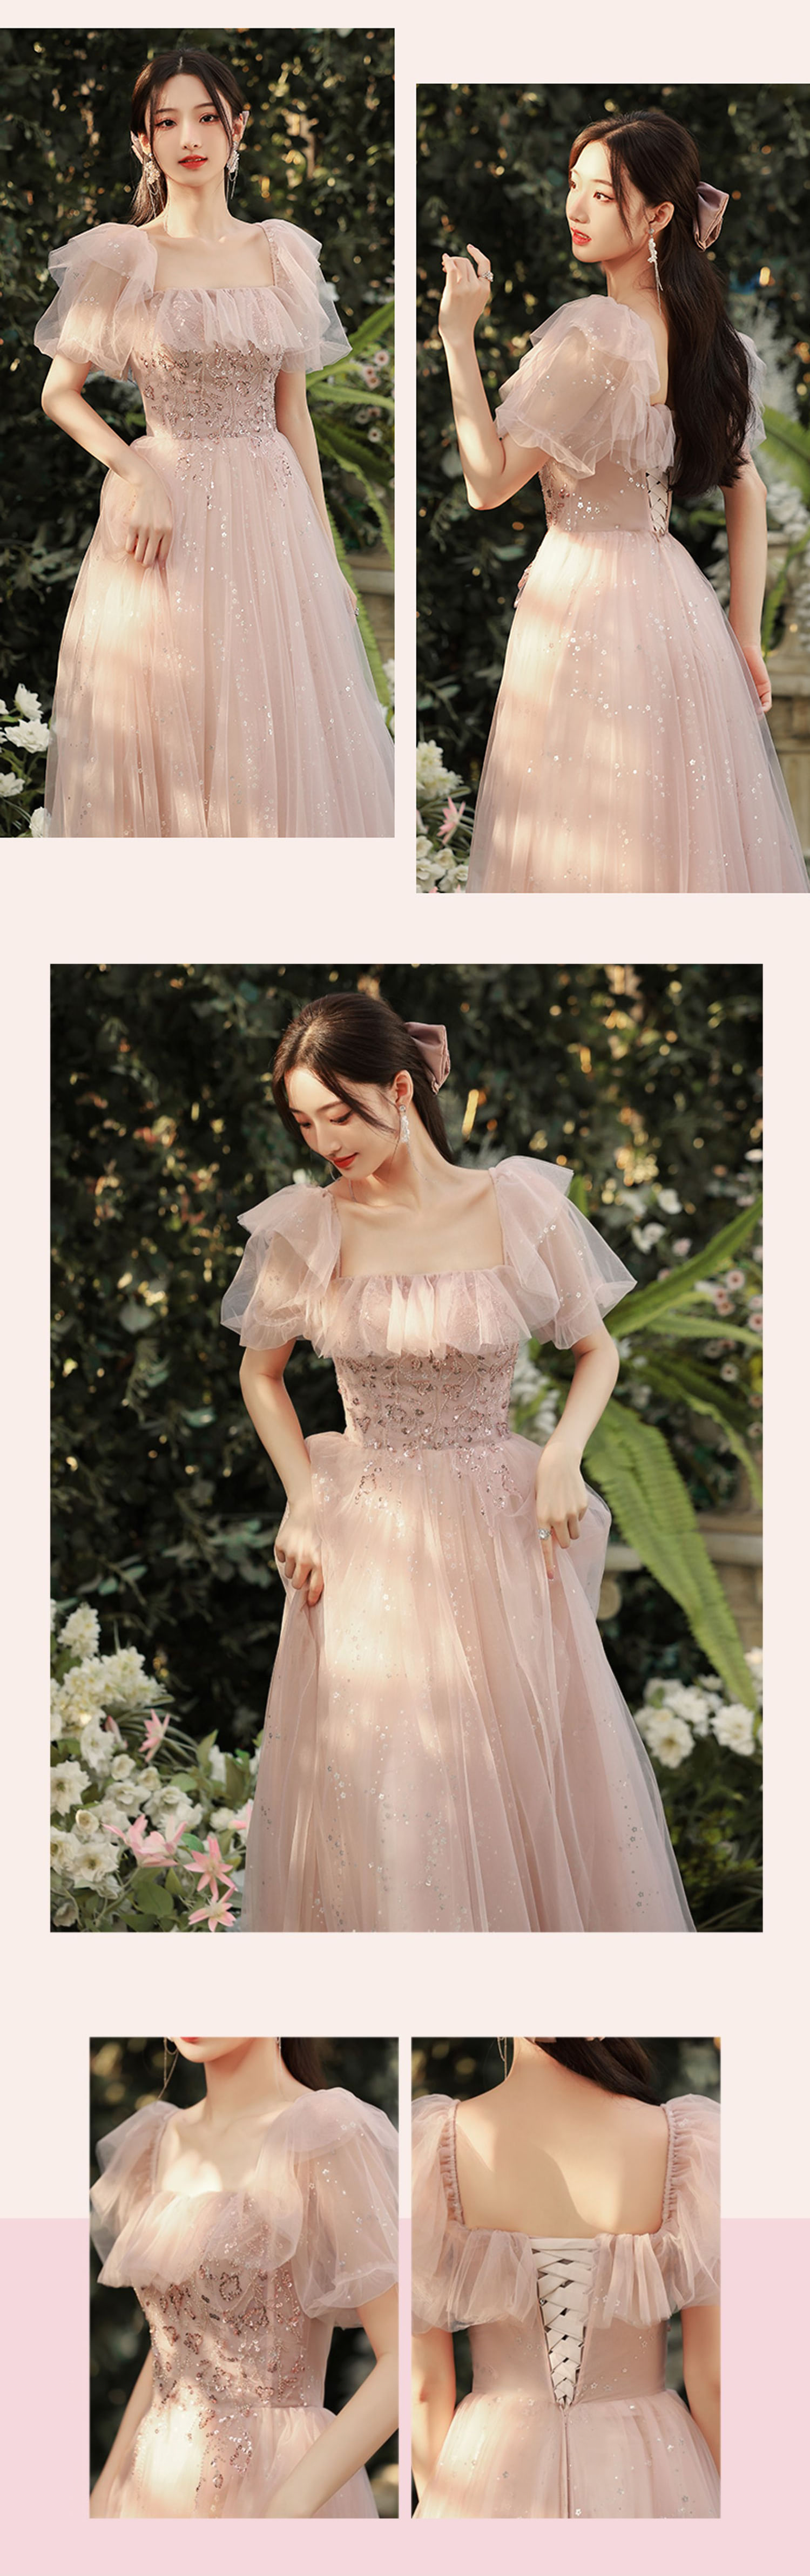 Aesthetic-Pink-Bridal-Wedding-Party-Bridesmaid-Long-Maxi-Dress24.jpg